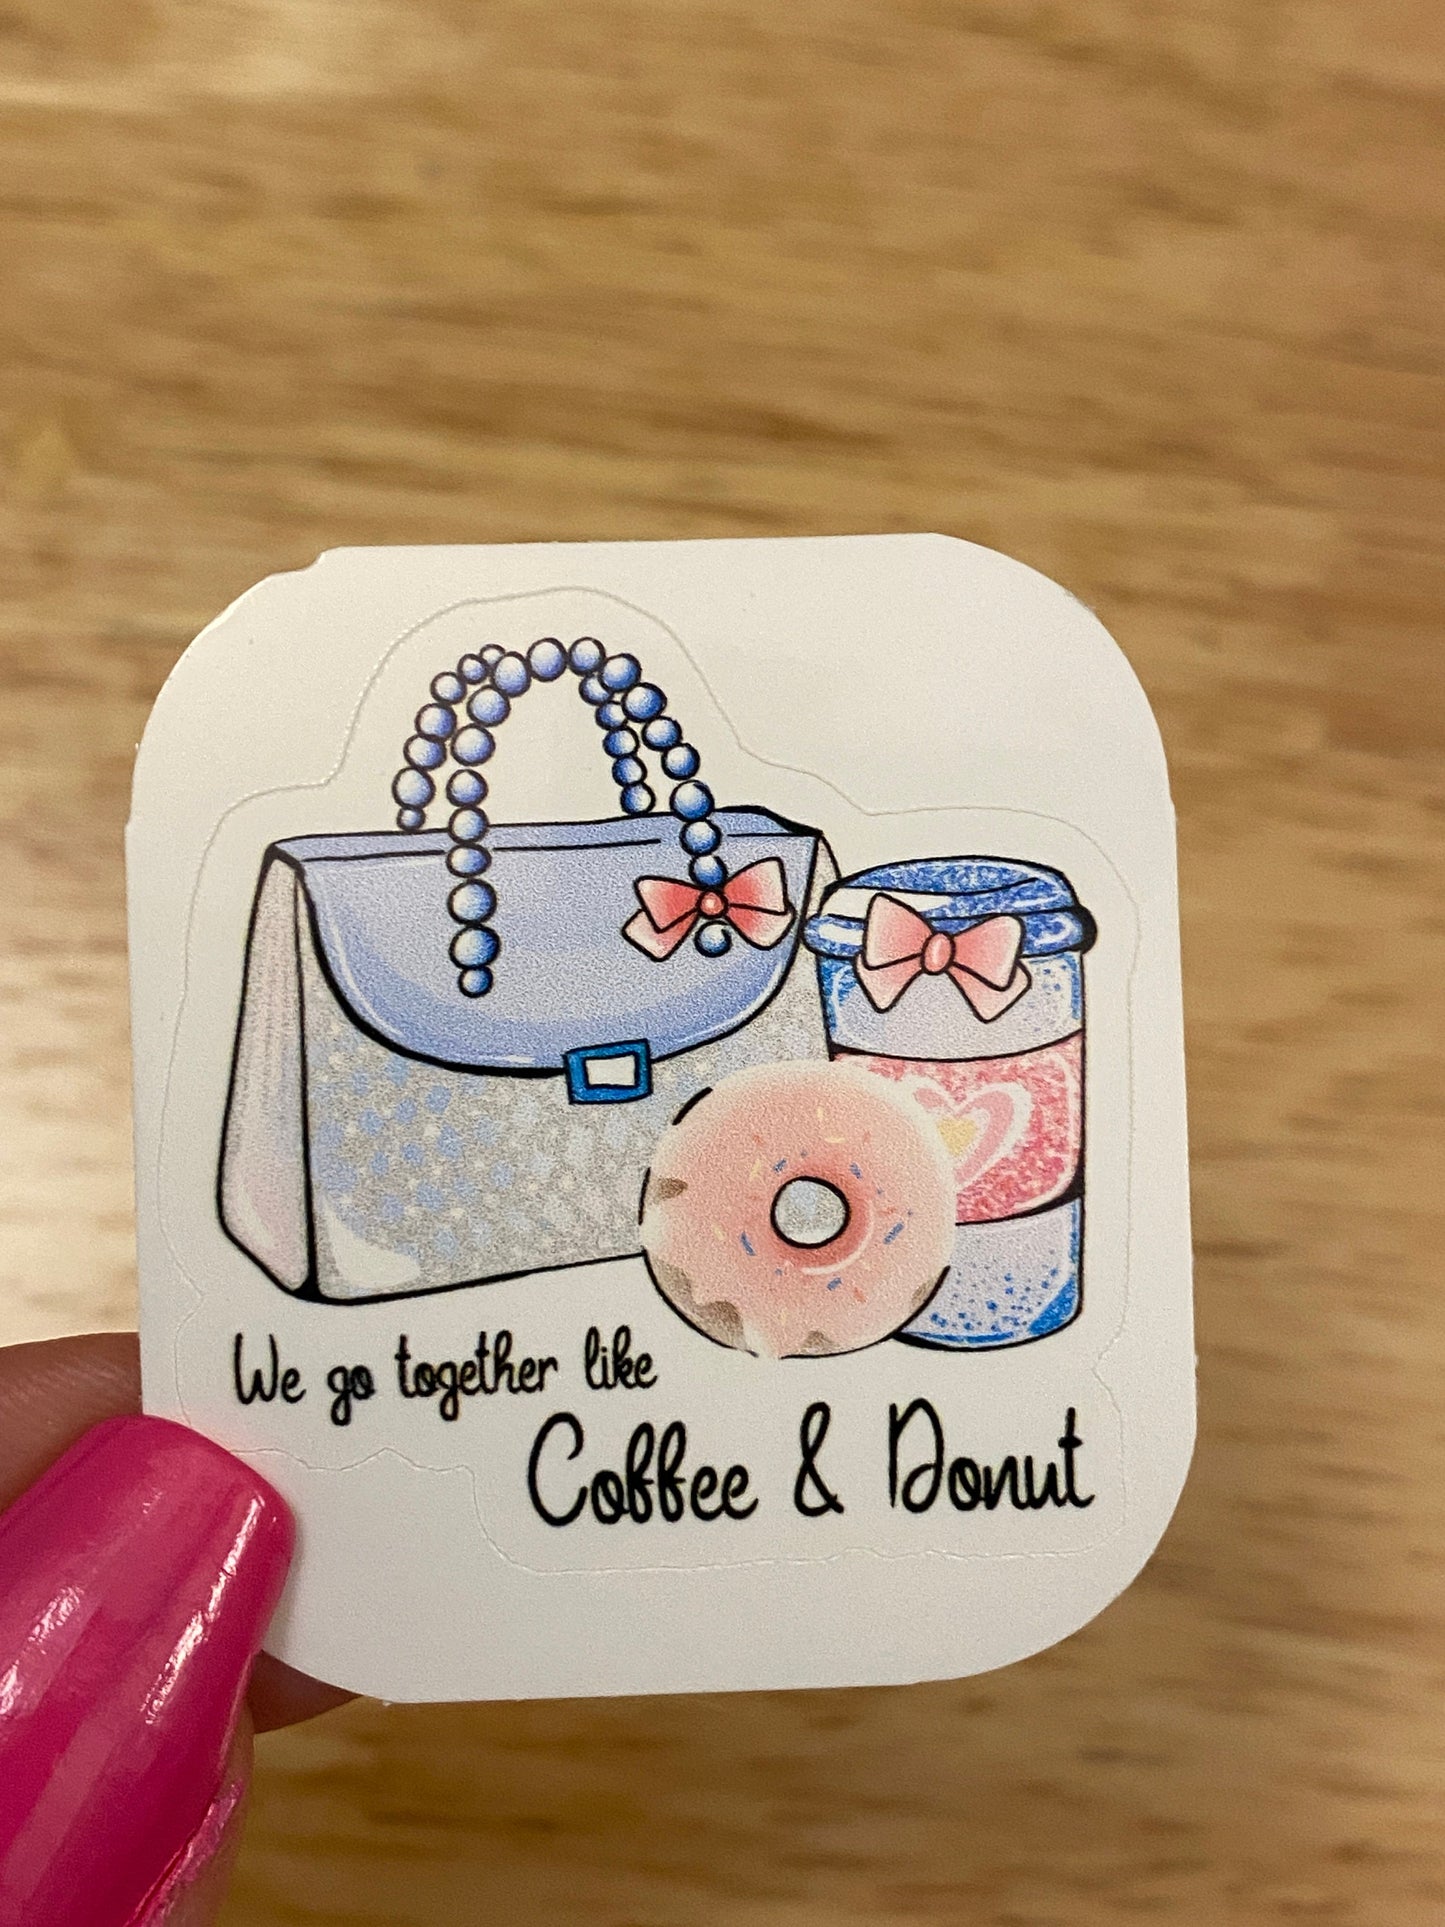 We Go together like Coffee & Donut Sticker, Cute Coffee sticker, Coffee Cup, Drink Coffee, Coffee sticker, Donut Sticker